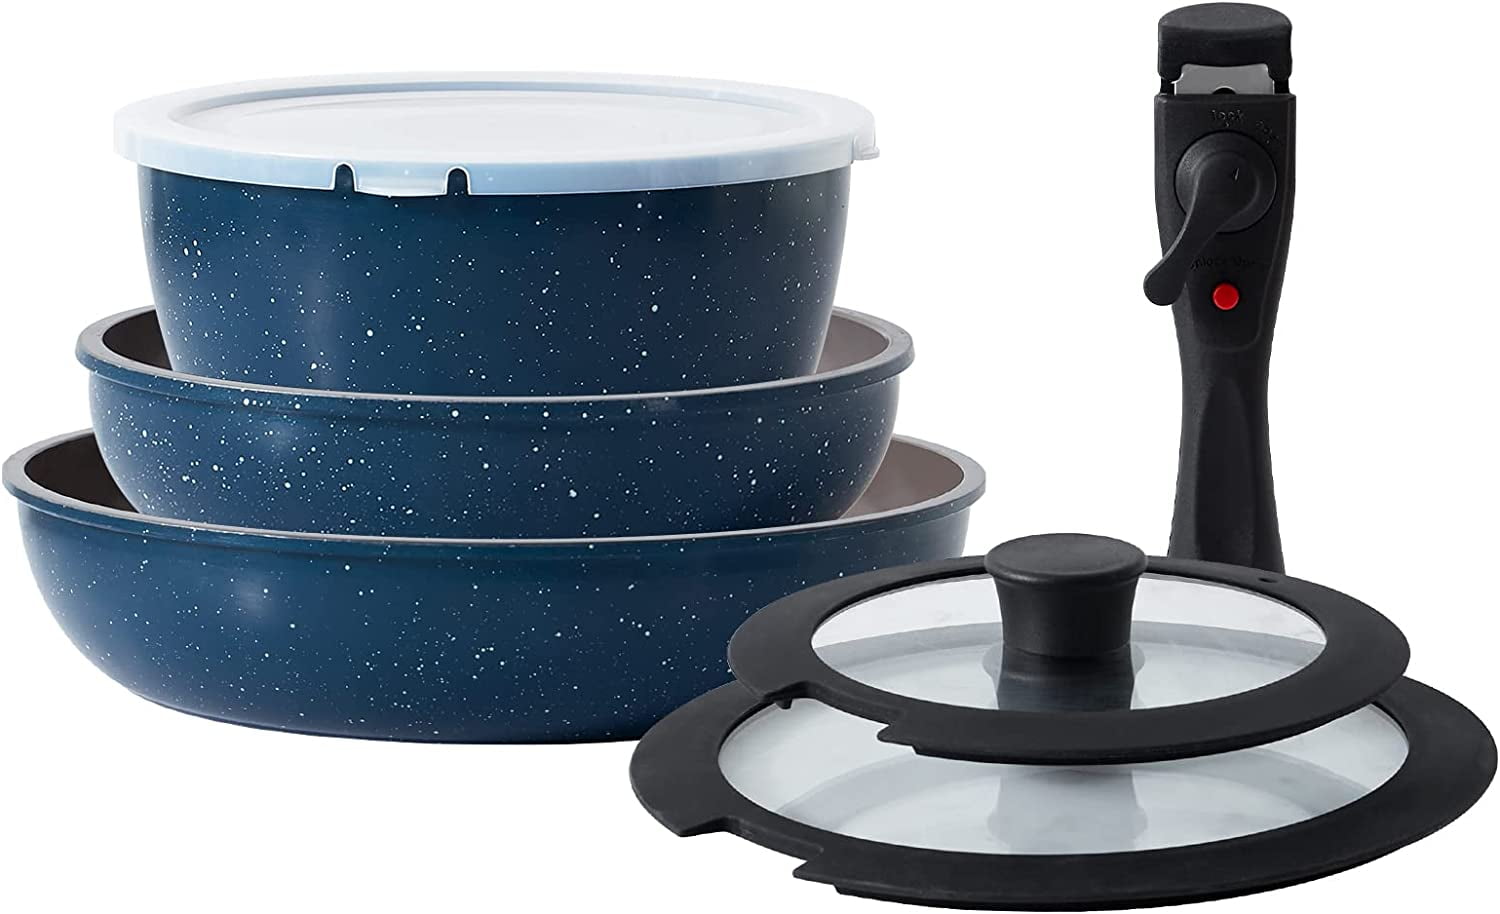 Pots and Pans Set with Detachable Handle - 12 Pcs Nonstick Ceramic Cookware  Set with Lids, Non Toxic Cookware Set, RV Cookware Set,Camping Cooking